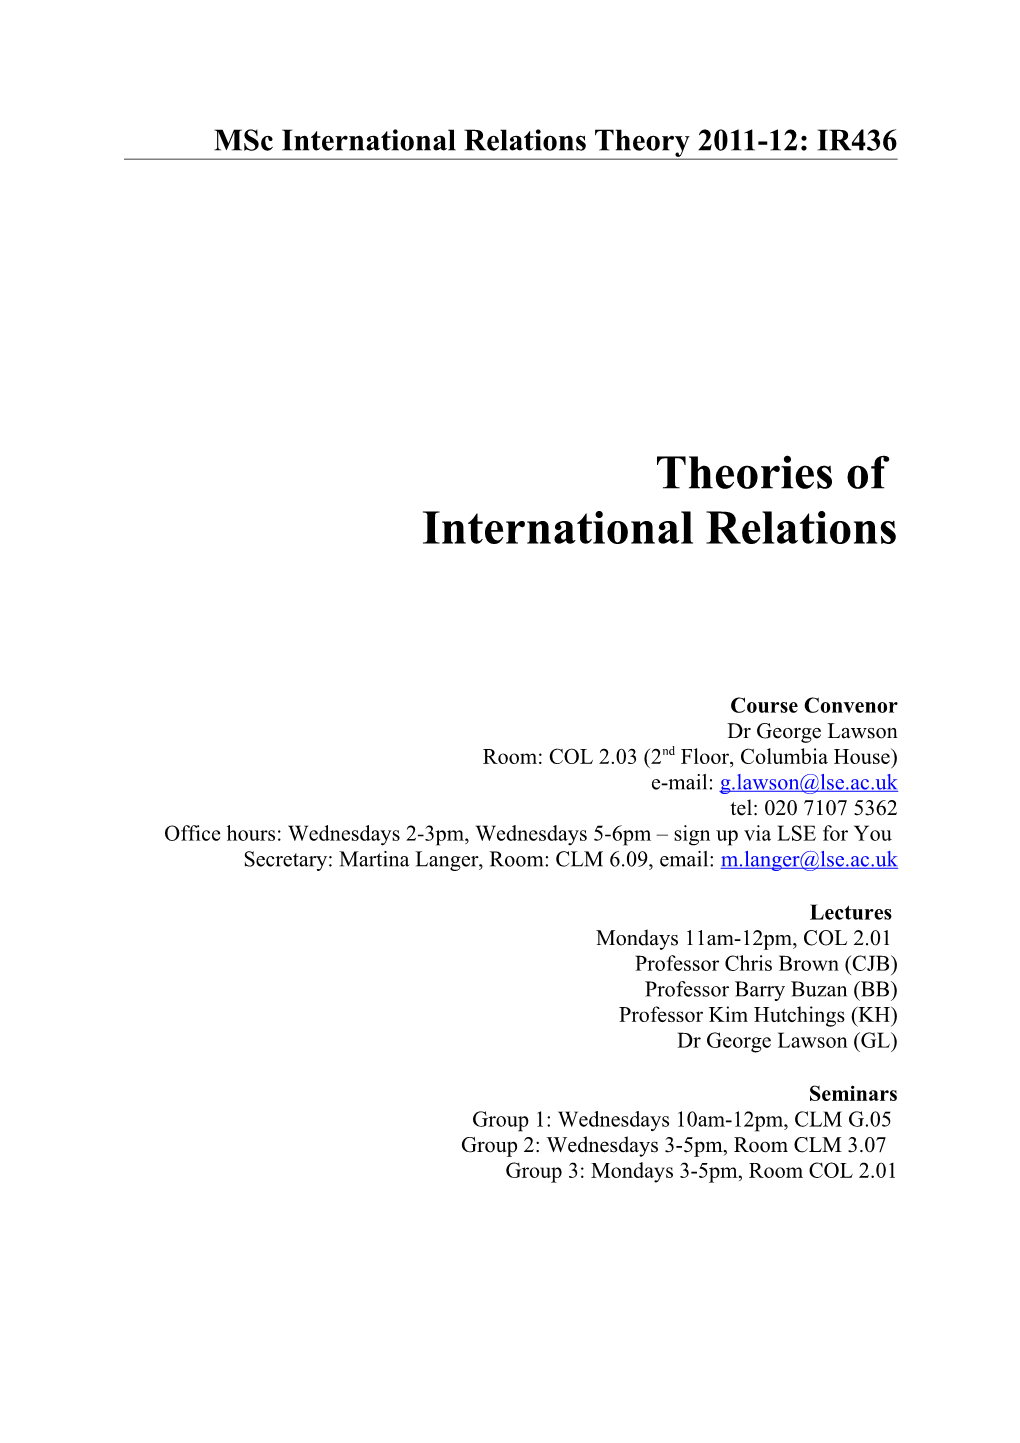 Msc International Relations Theory 2008-9: IR436